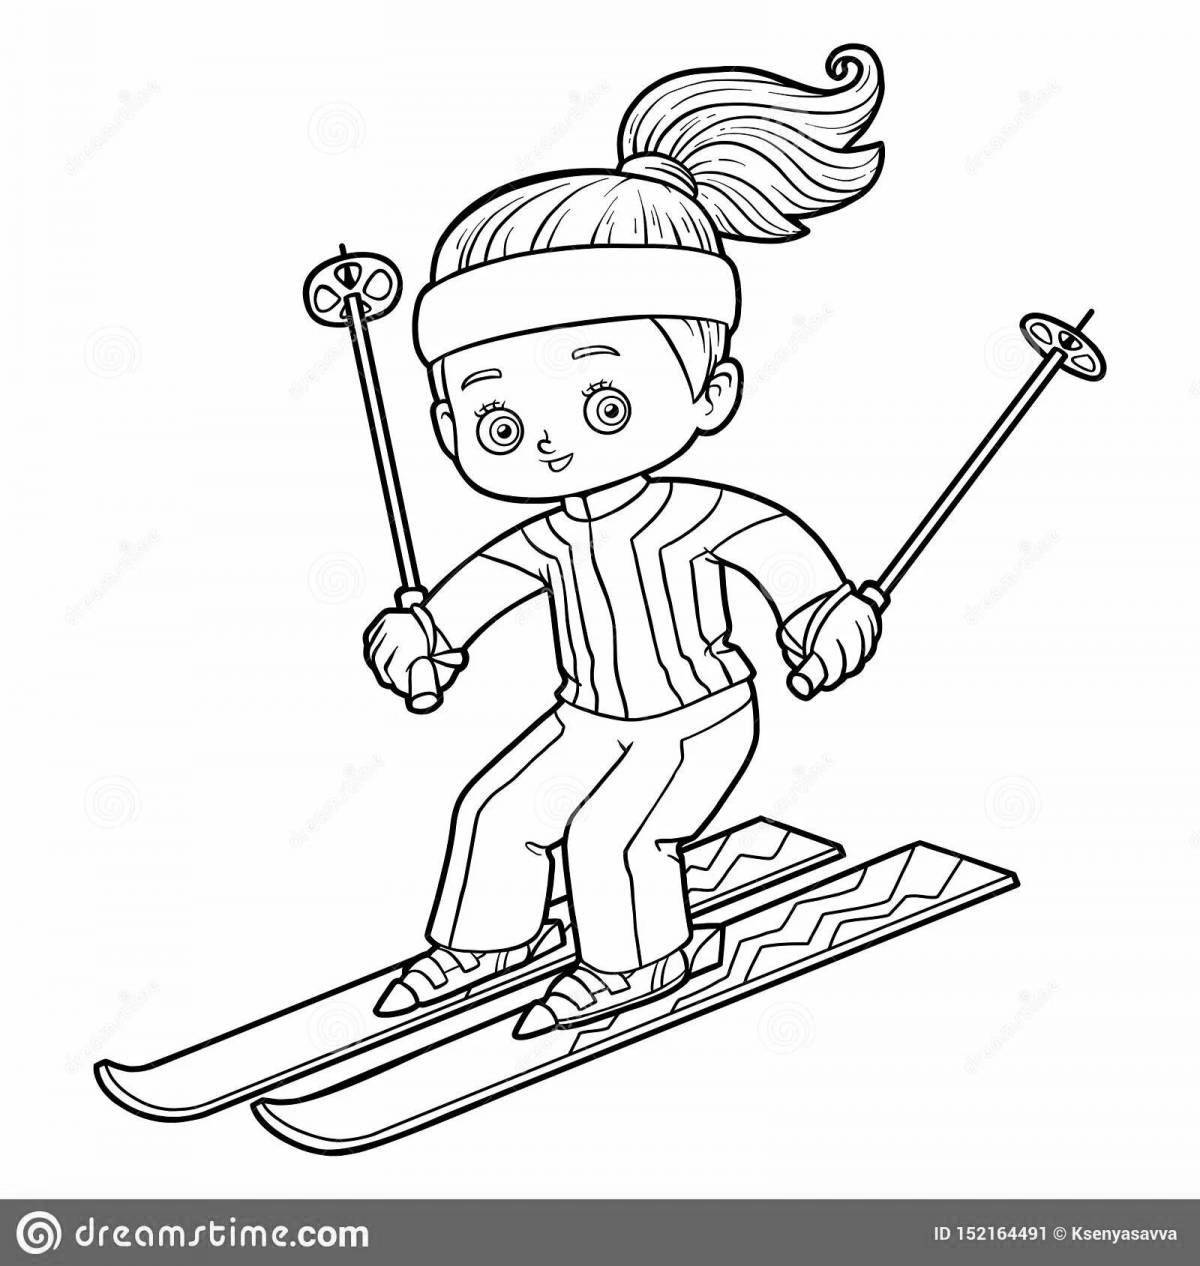 Adventurer on skis